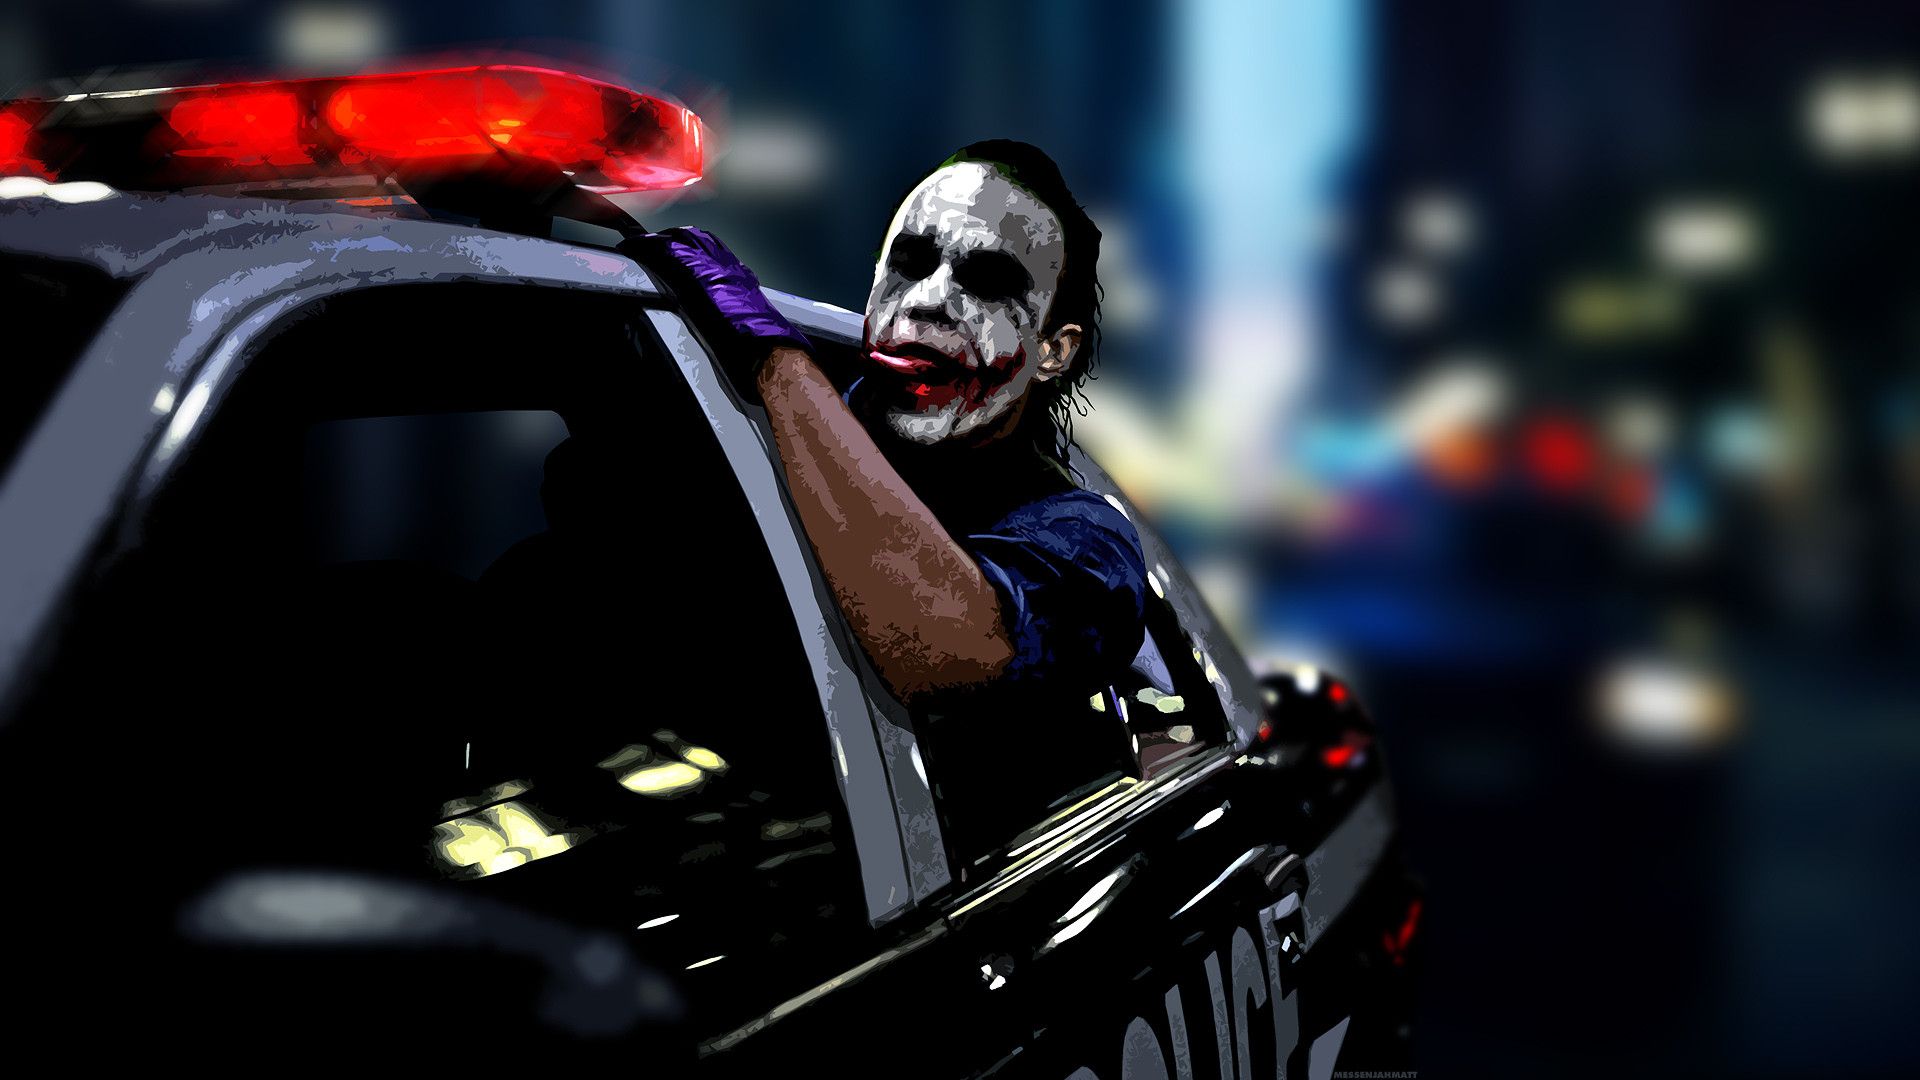 Free download Joker in police car Poster Batman HD Wallpaper of JokerPicture for [1920x1080] for your Desktop, Mobile & Tablet. Explore Cop Car Movie Wallpaper. Police Car Wallpaper, Free